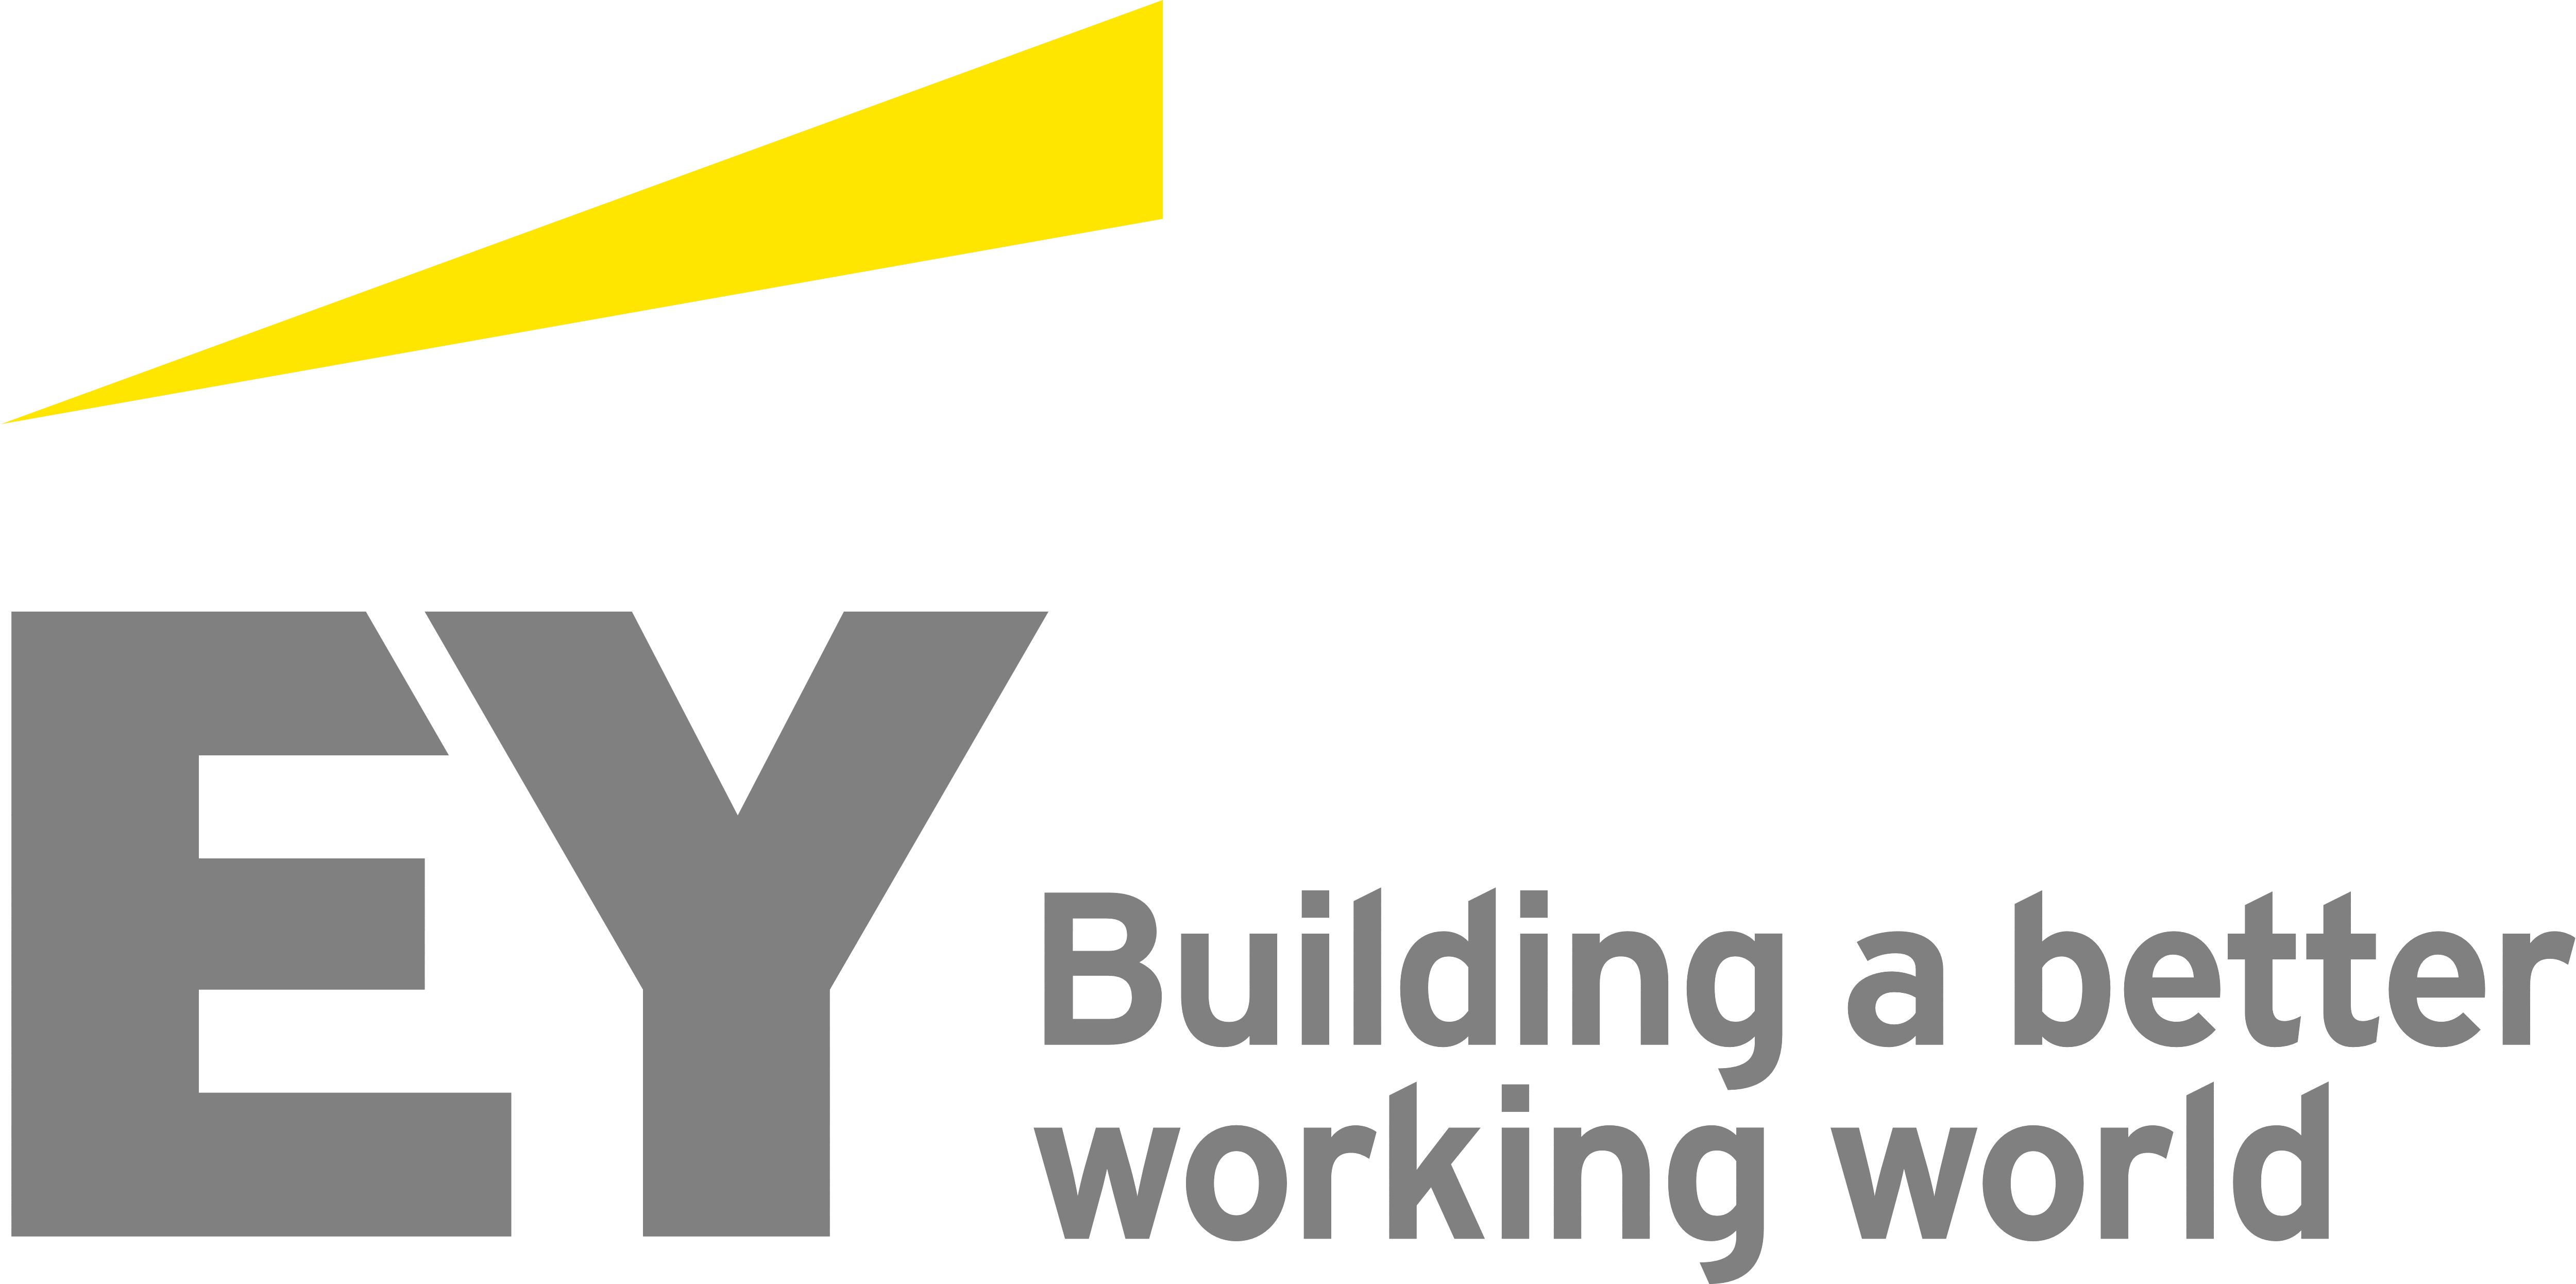 EY Logo and Slogan